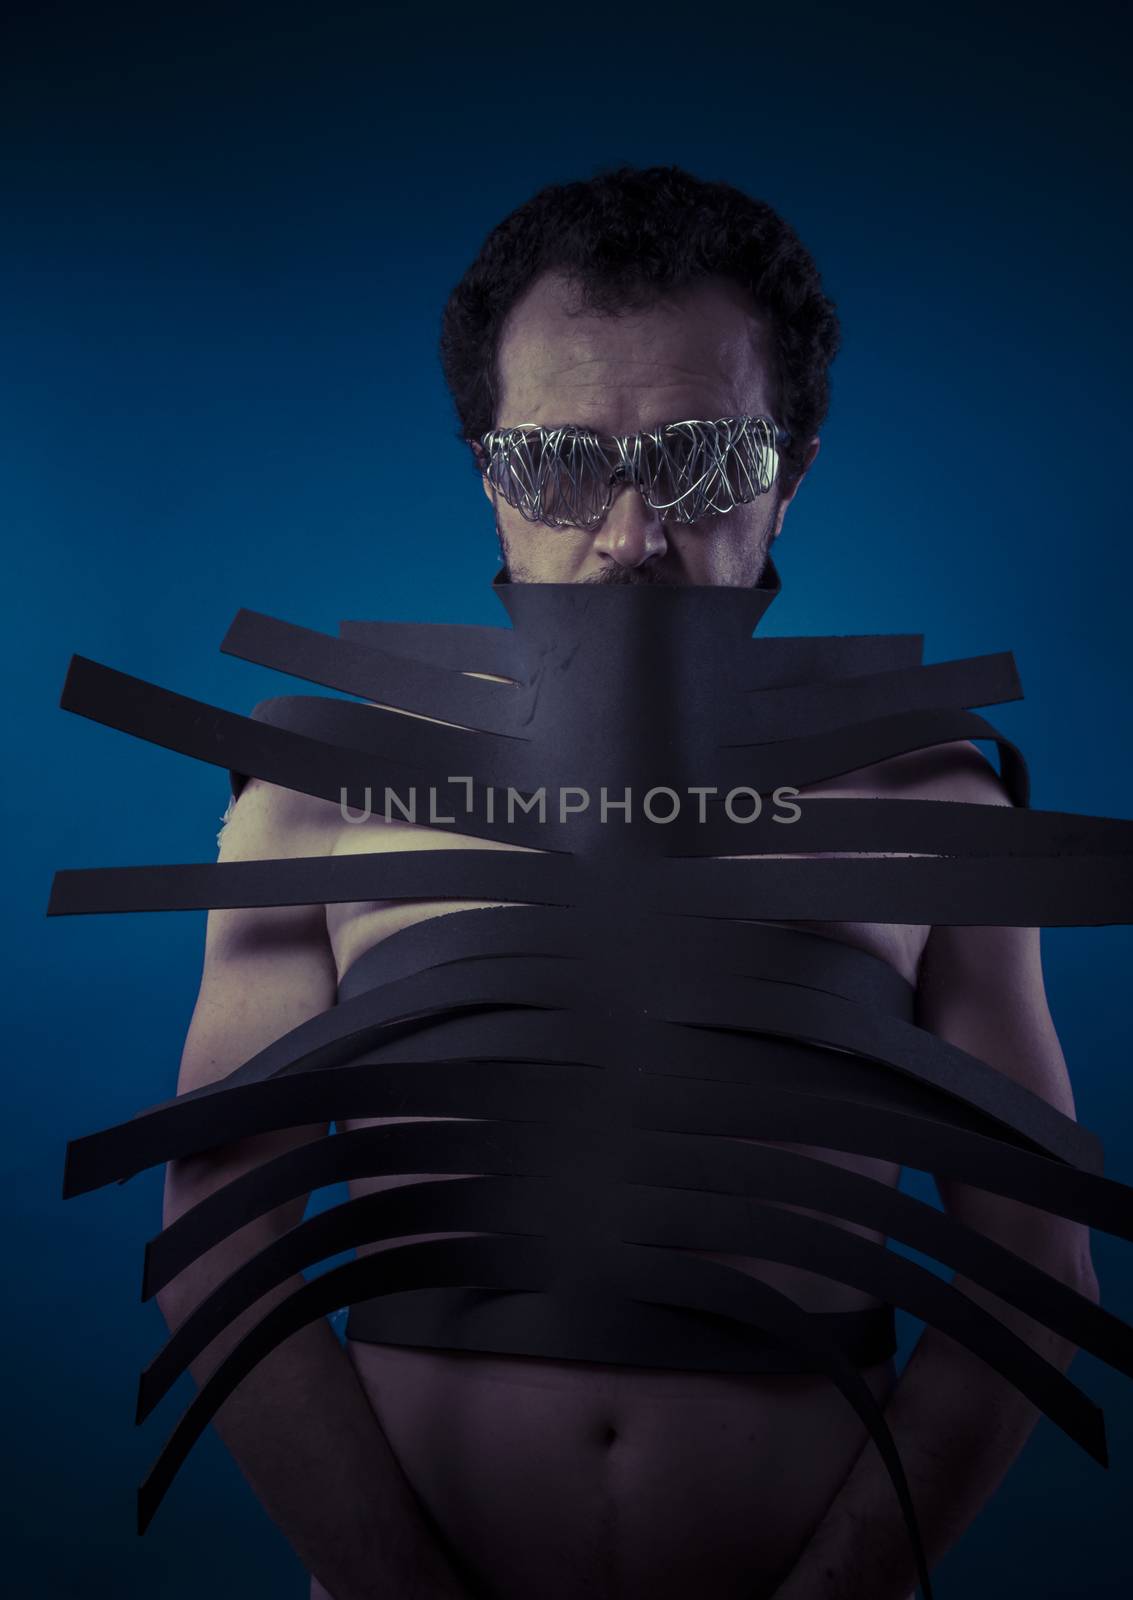 Bdsm, man covered with black strips, shibari concept art by FernandoCortes